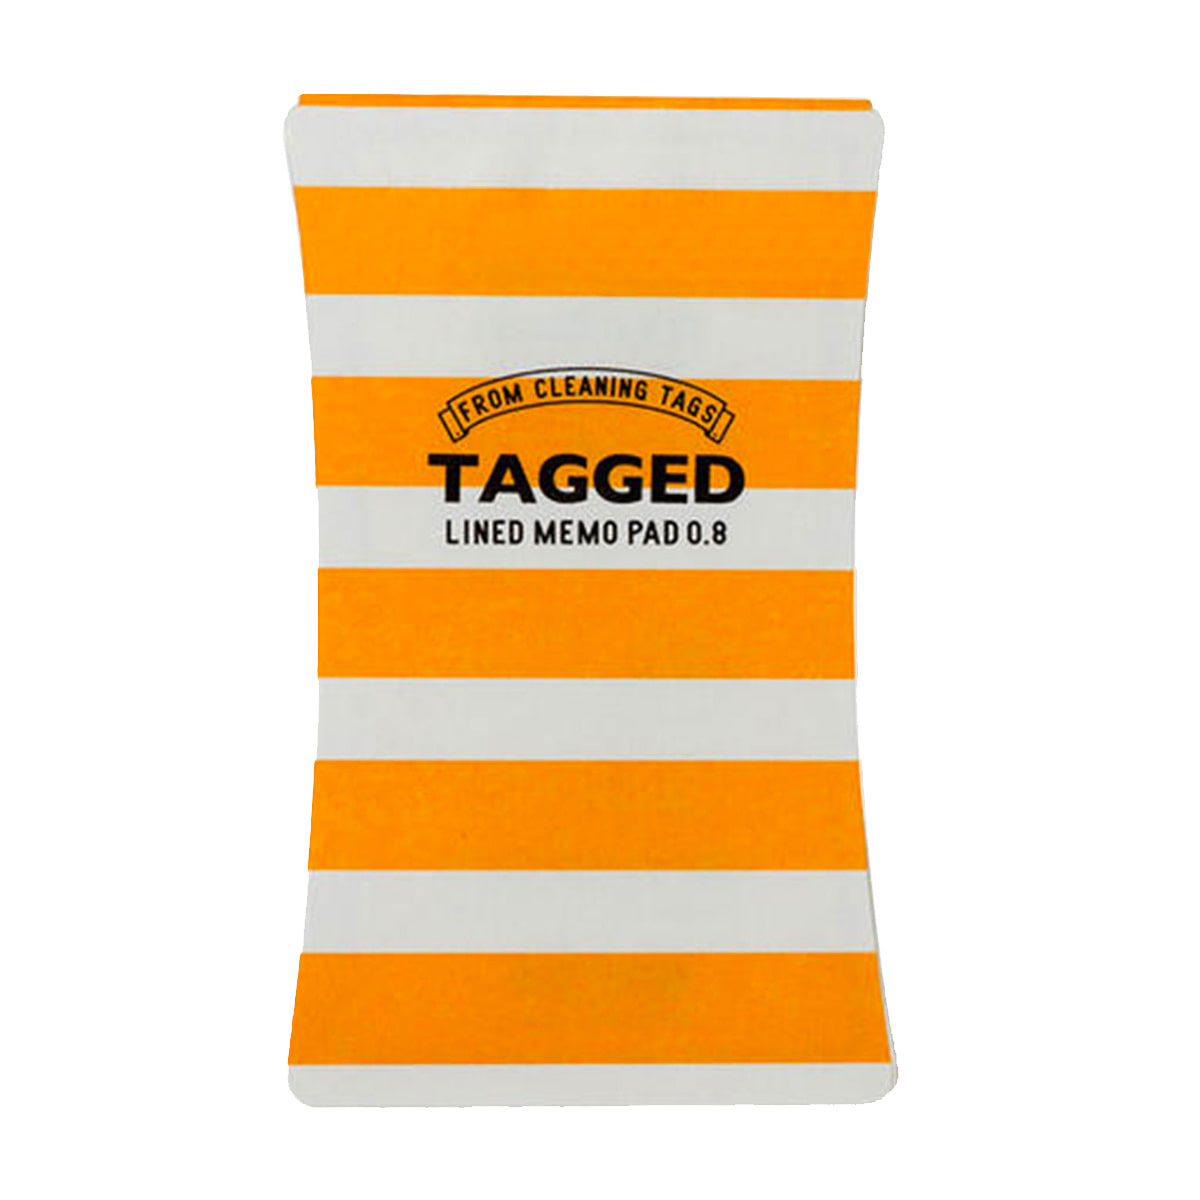 FOGBOWTAGGED memo pad / orange